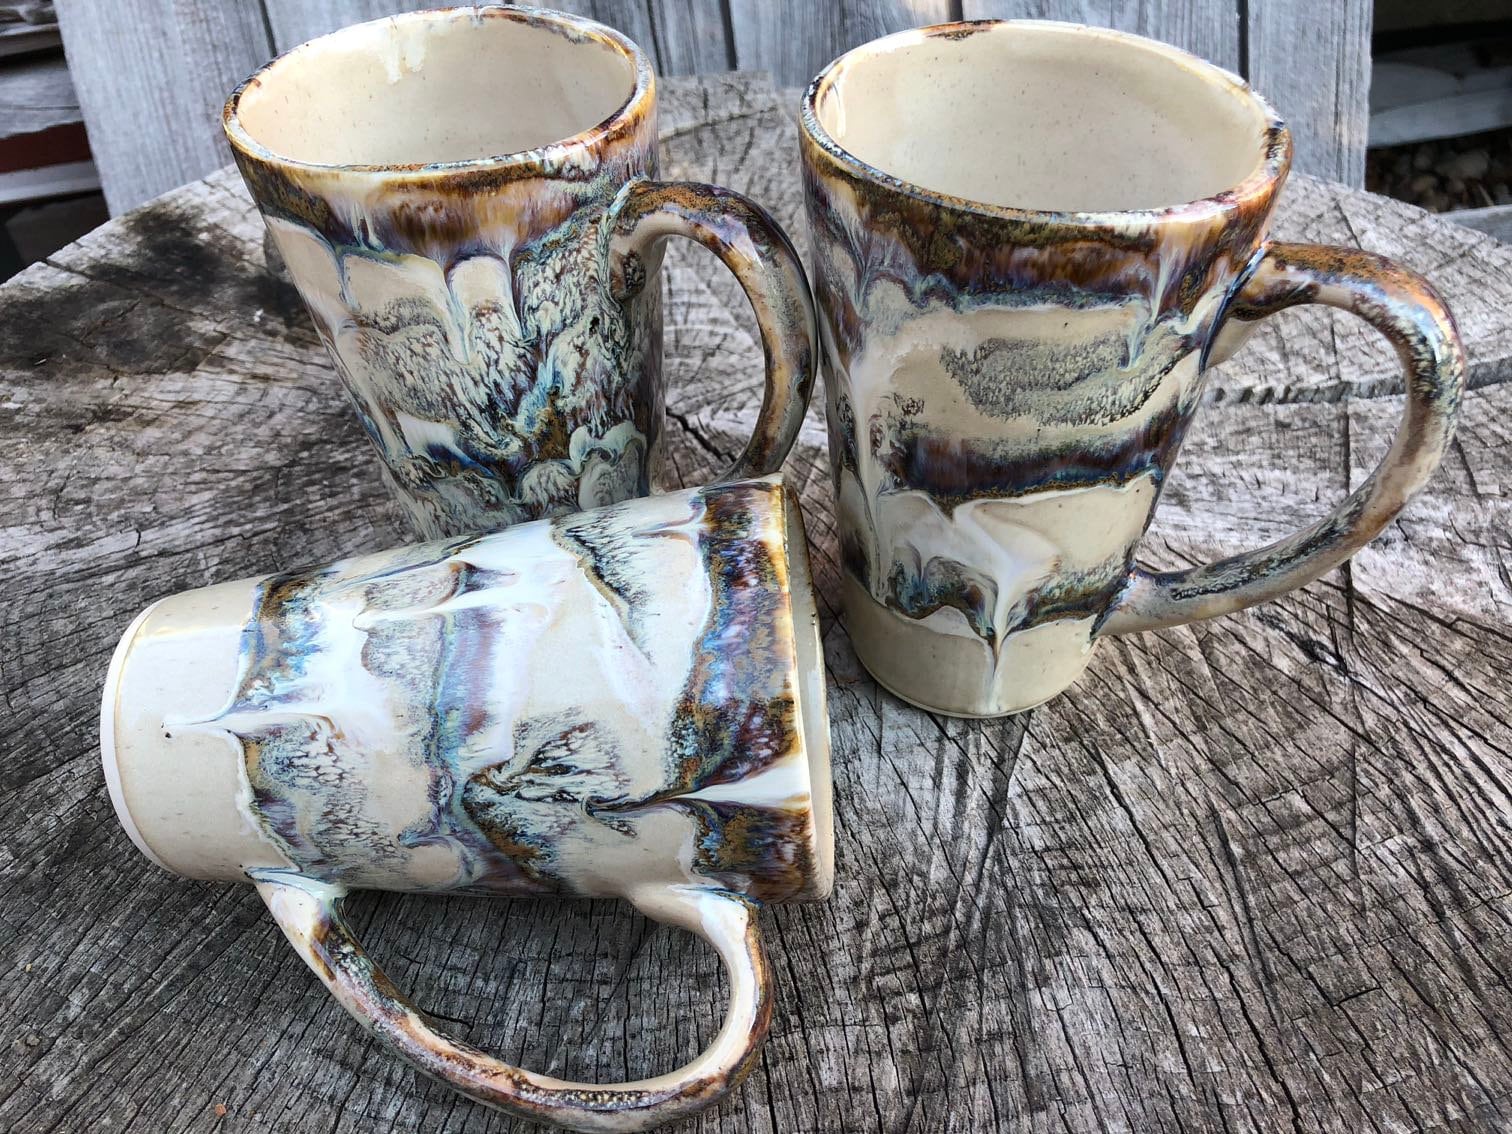 20 oz. Clary Tall Ceramic Mugs | Plum Grove